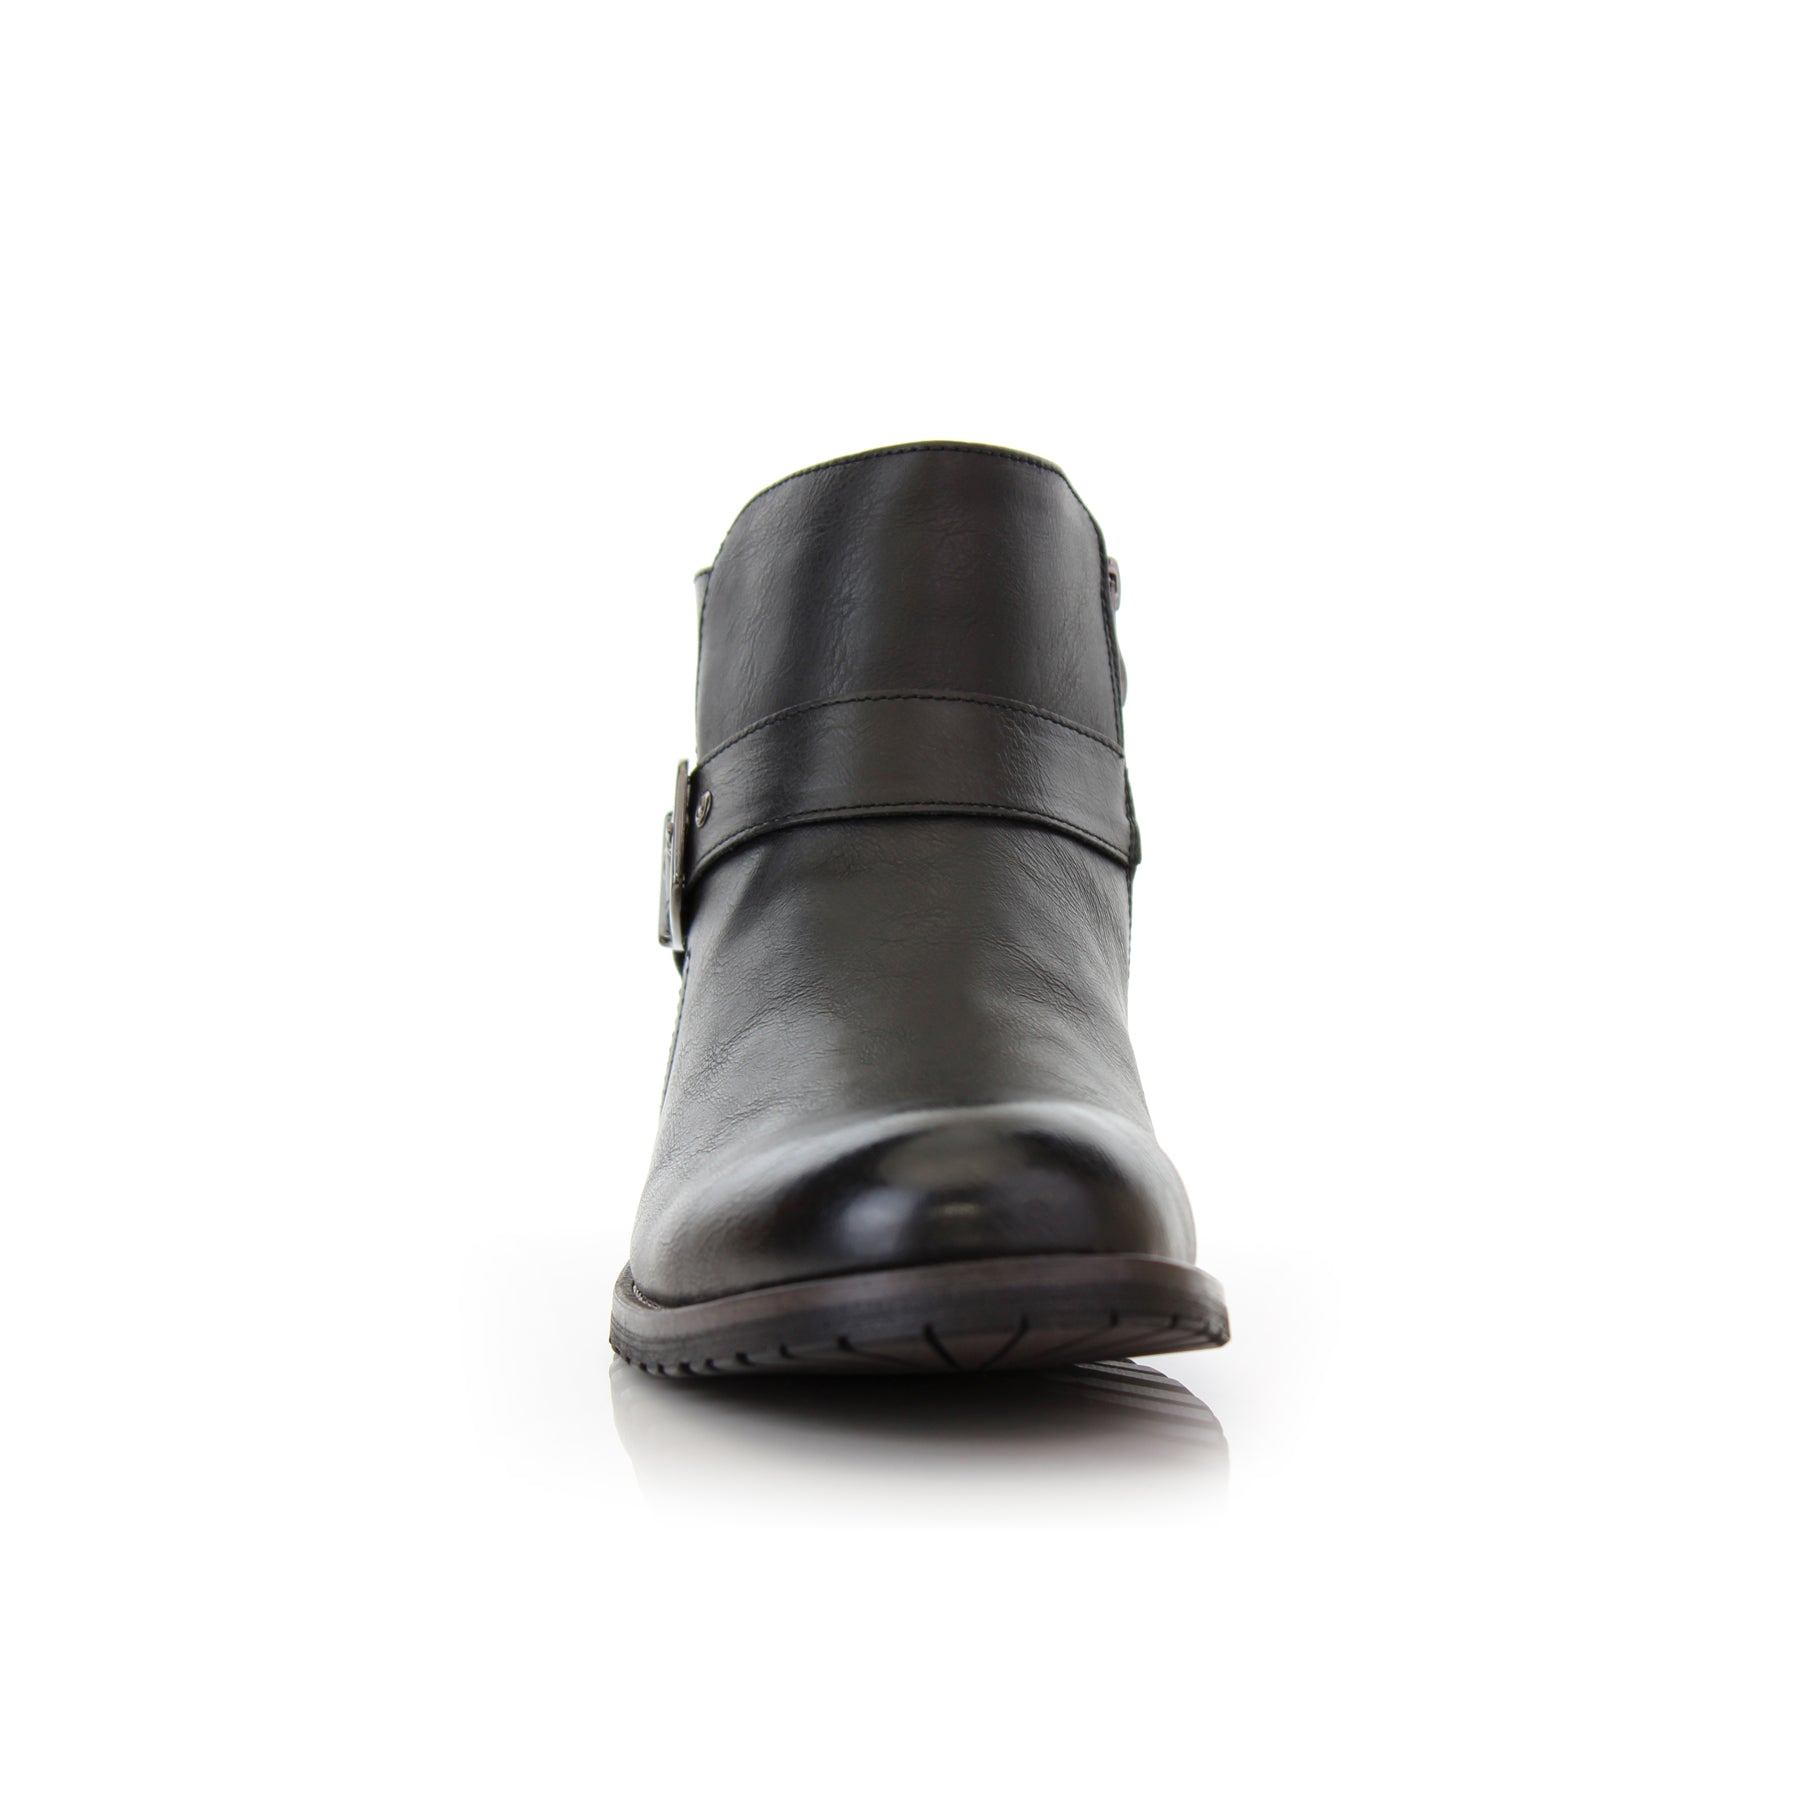 Slip-On Buckle Chelsea Boots | Dalton by Ferro Aldo | Conal Footwear | Front Angle View